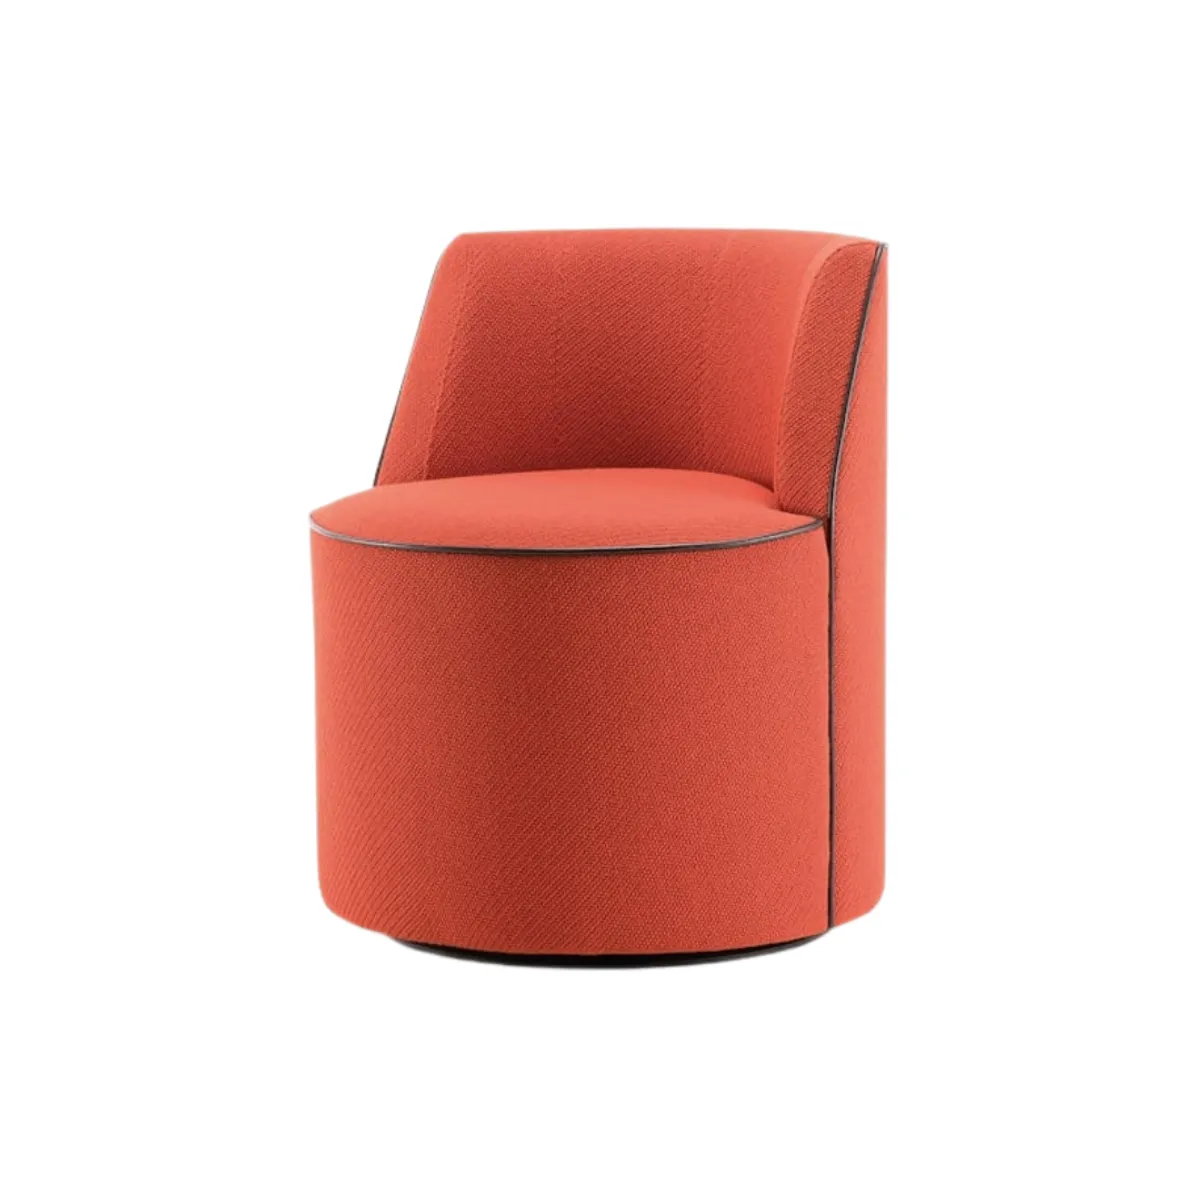 Tangerine chair 2